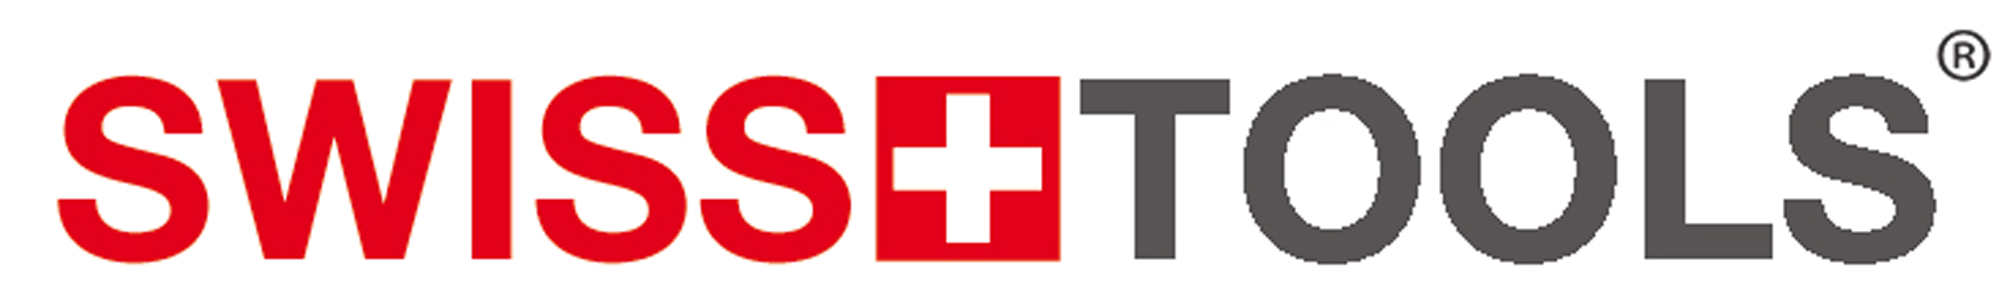 Swiss Tools logo